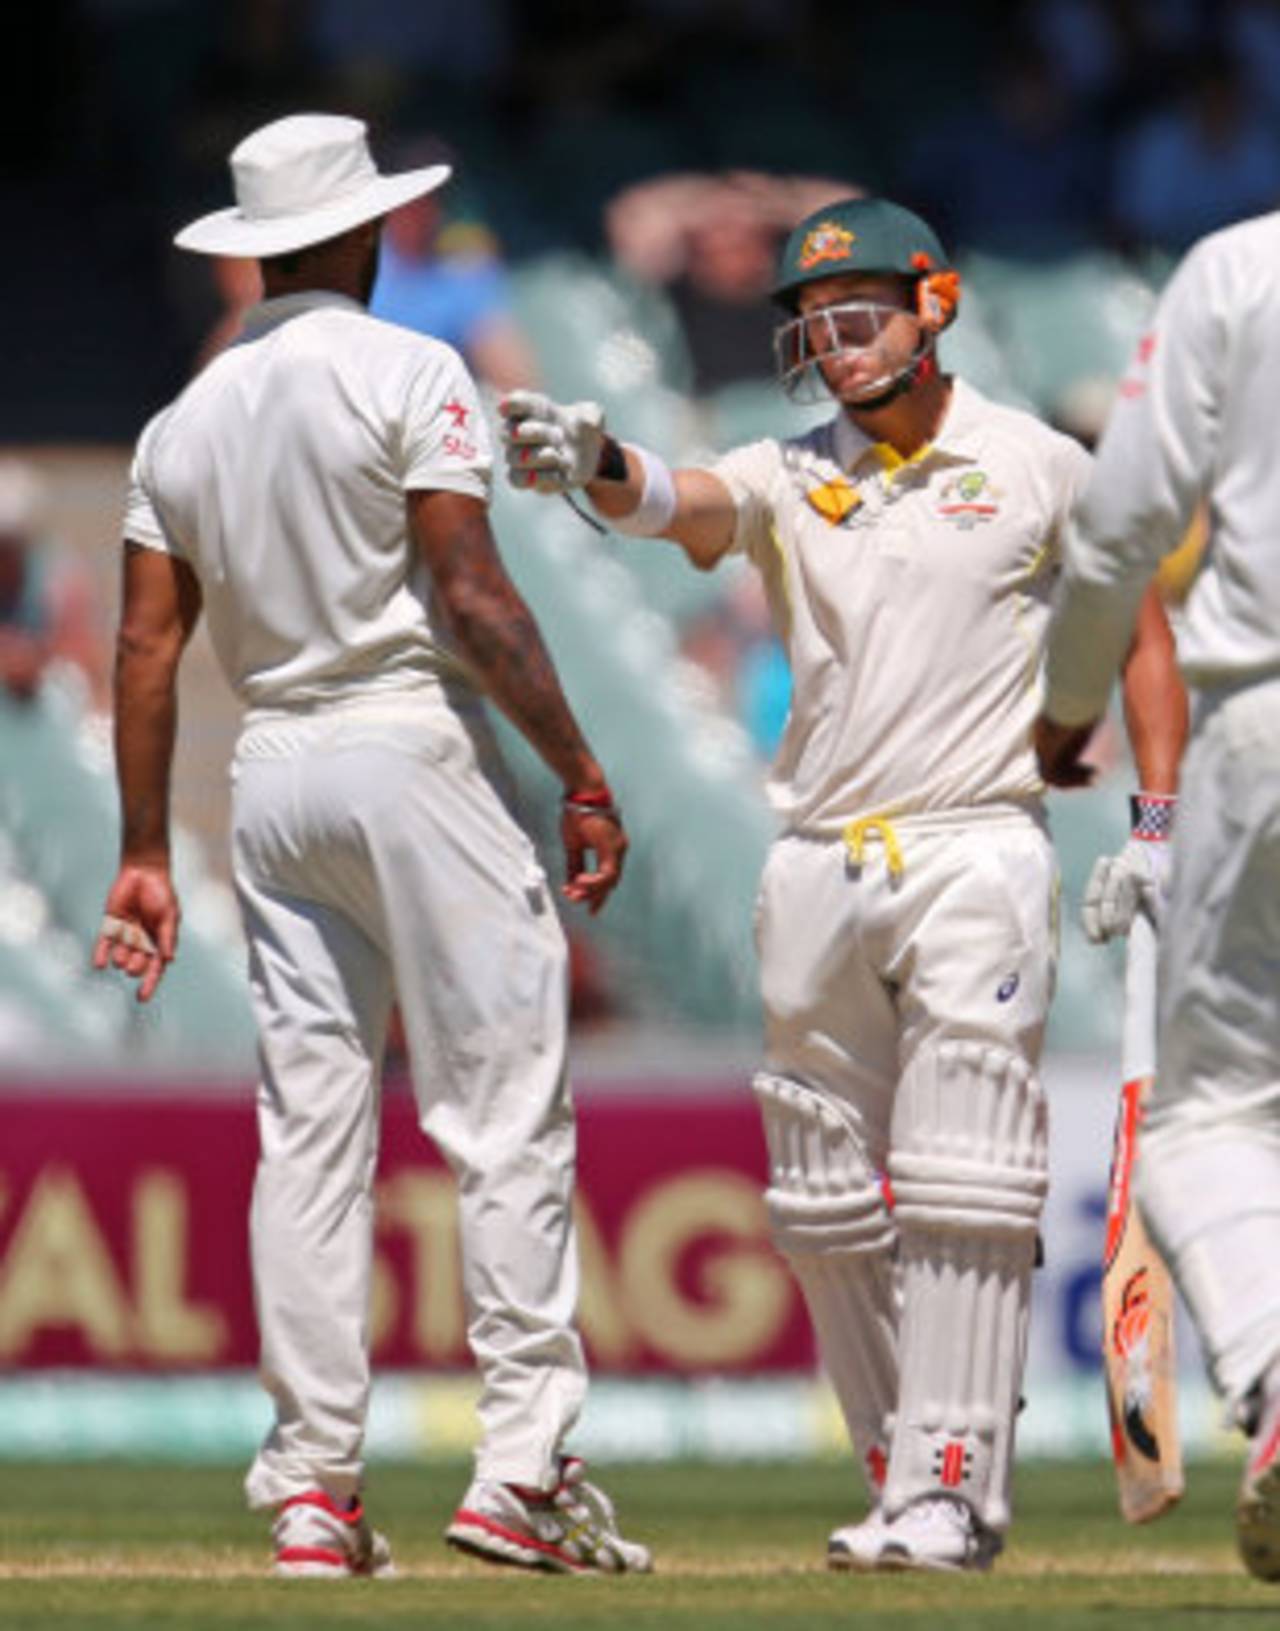 Shikhar Dhawan confronts David Warner, Australia v India, 1st Test, Adelaide, 4th day, December 12, 2014